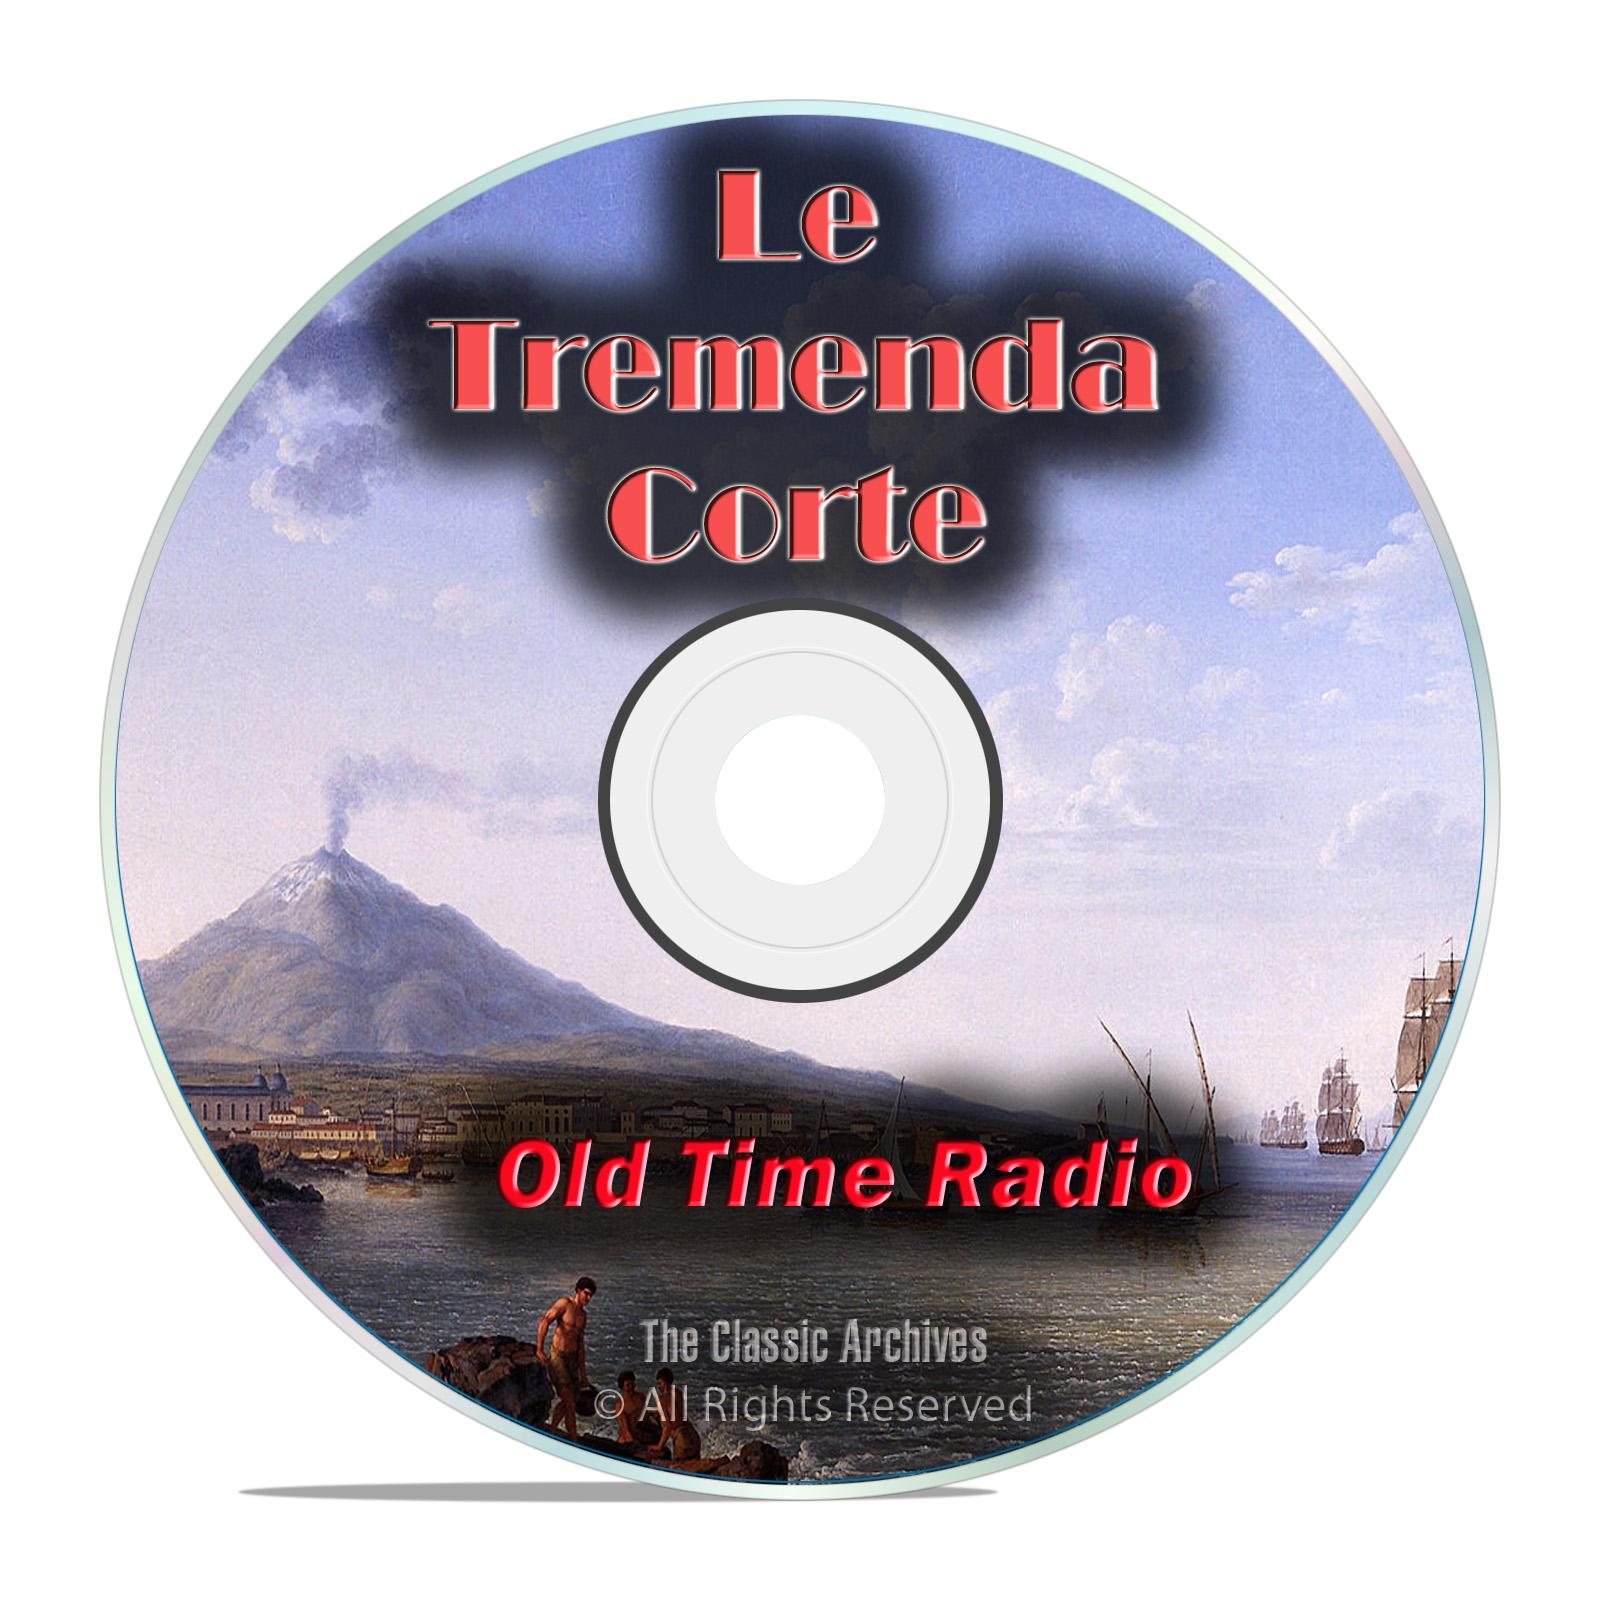 La Tremende Corte, 260 Spanish Old Time Radio Shows, Cuban mp3 DVD